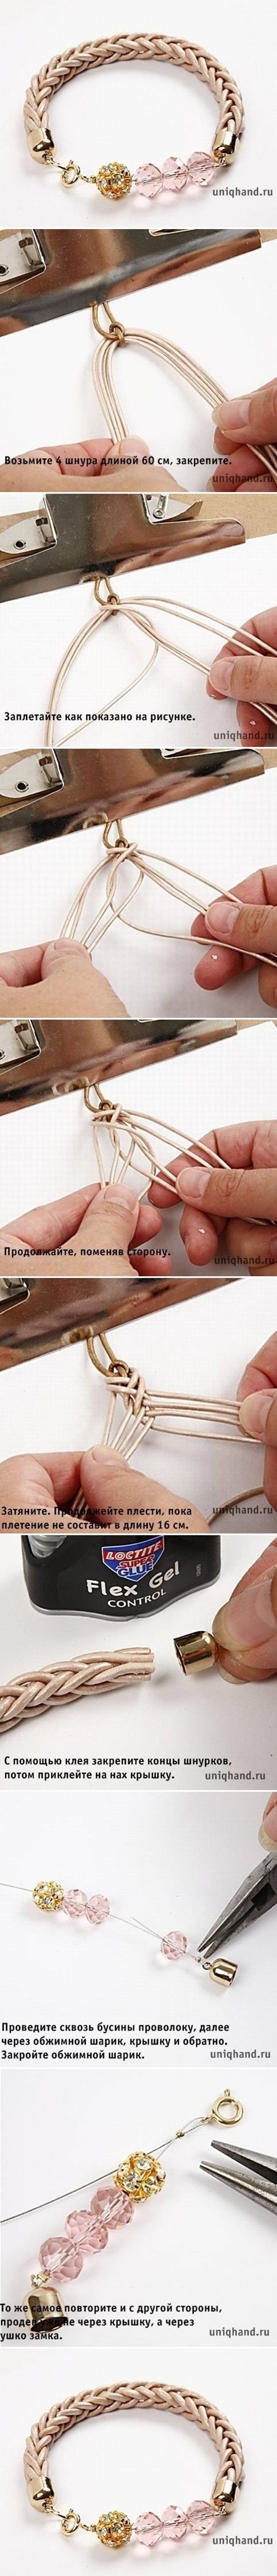 woven Cord Bracelet tutorial